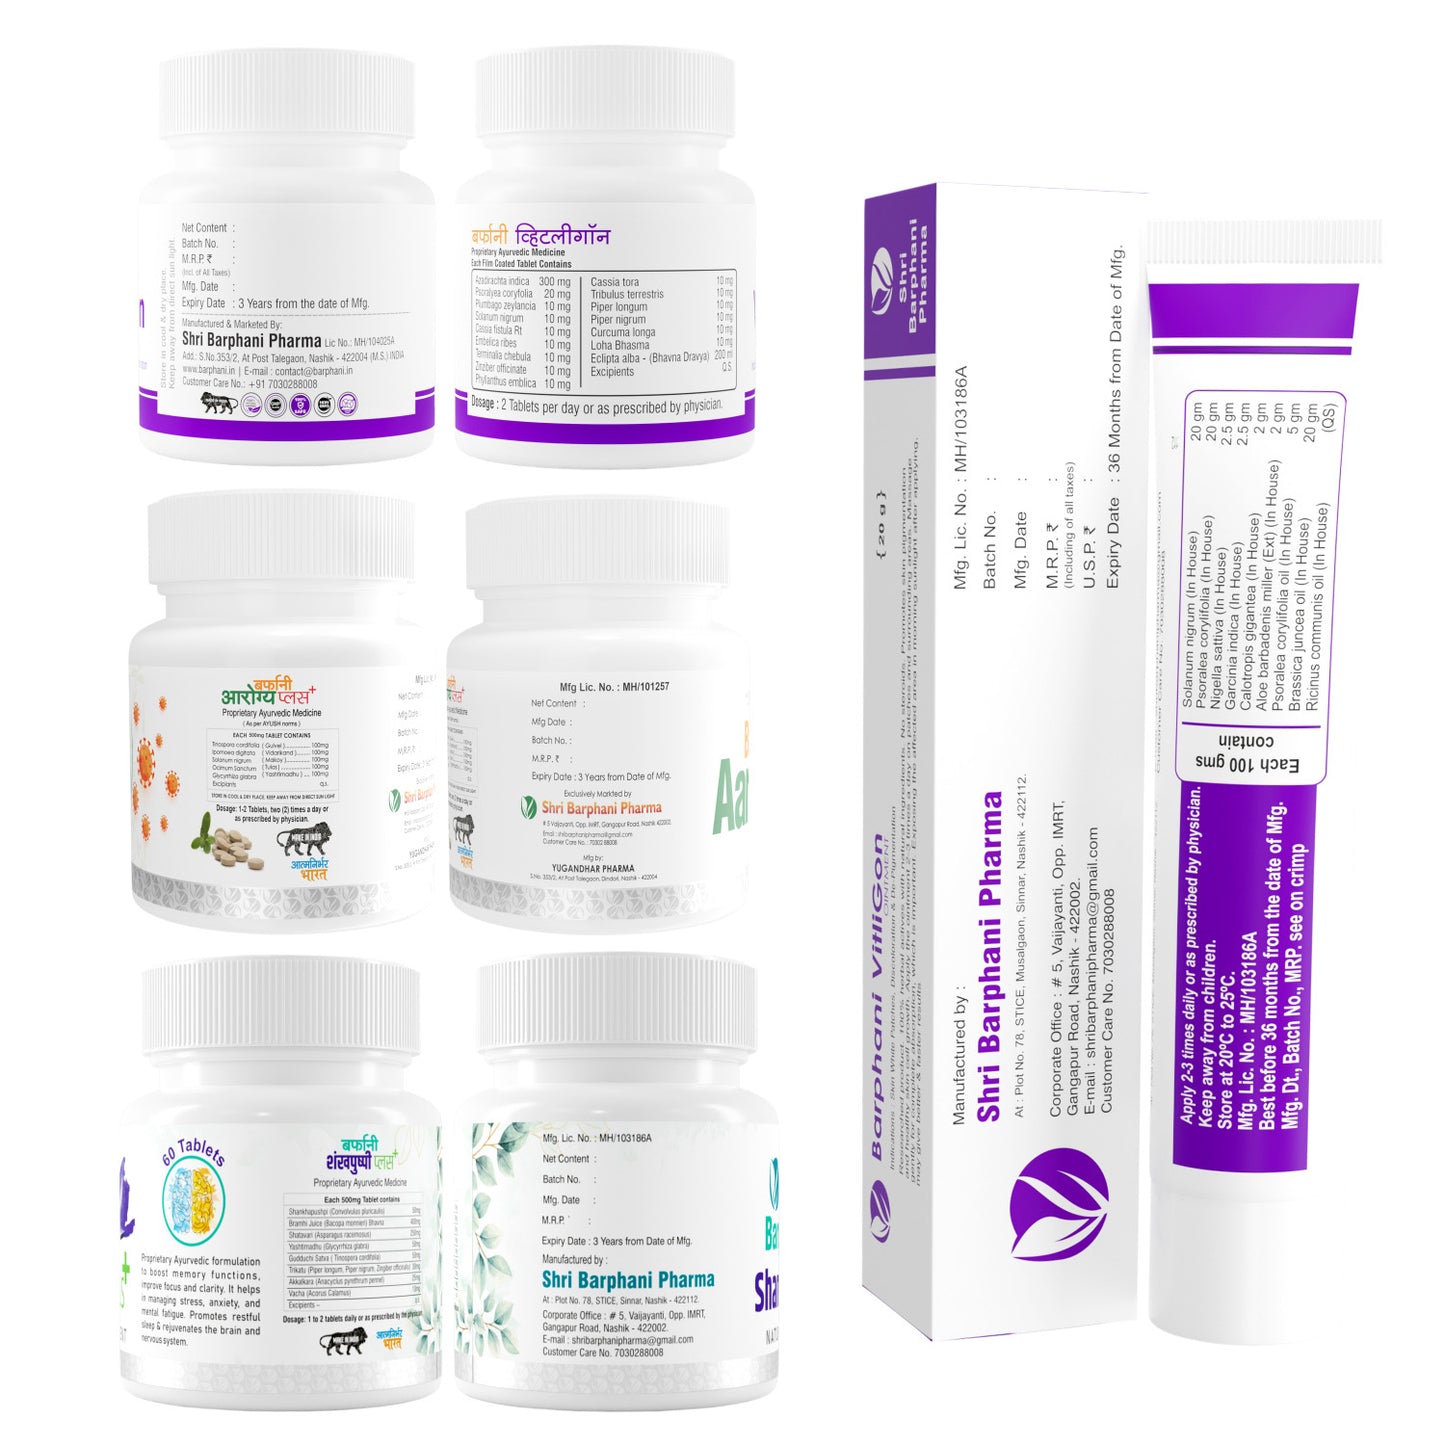 Barphani VitliGon Combo3- VitiliGon Cream 6, VitliGon Tab 60, AarogyaPlus Tab 90, ShankhpushpiPlus Tab 60 For Vitiligo White Patches & Re-Pigmentation